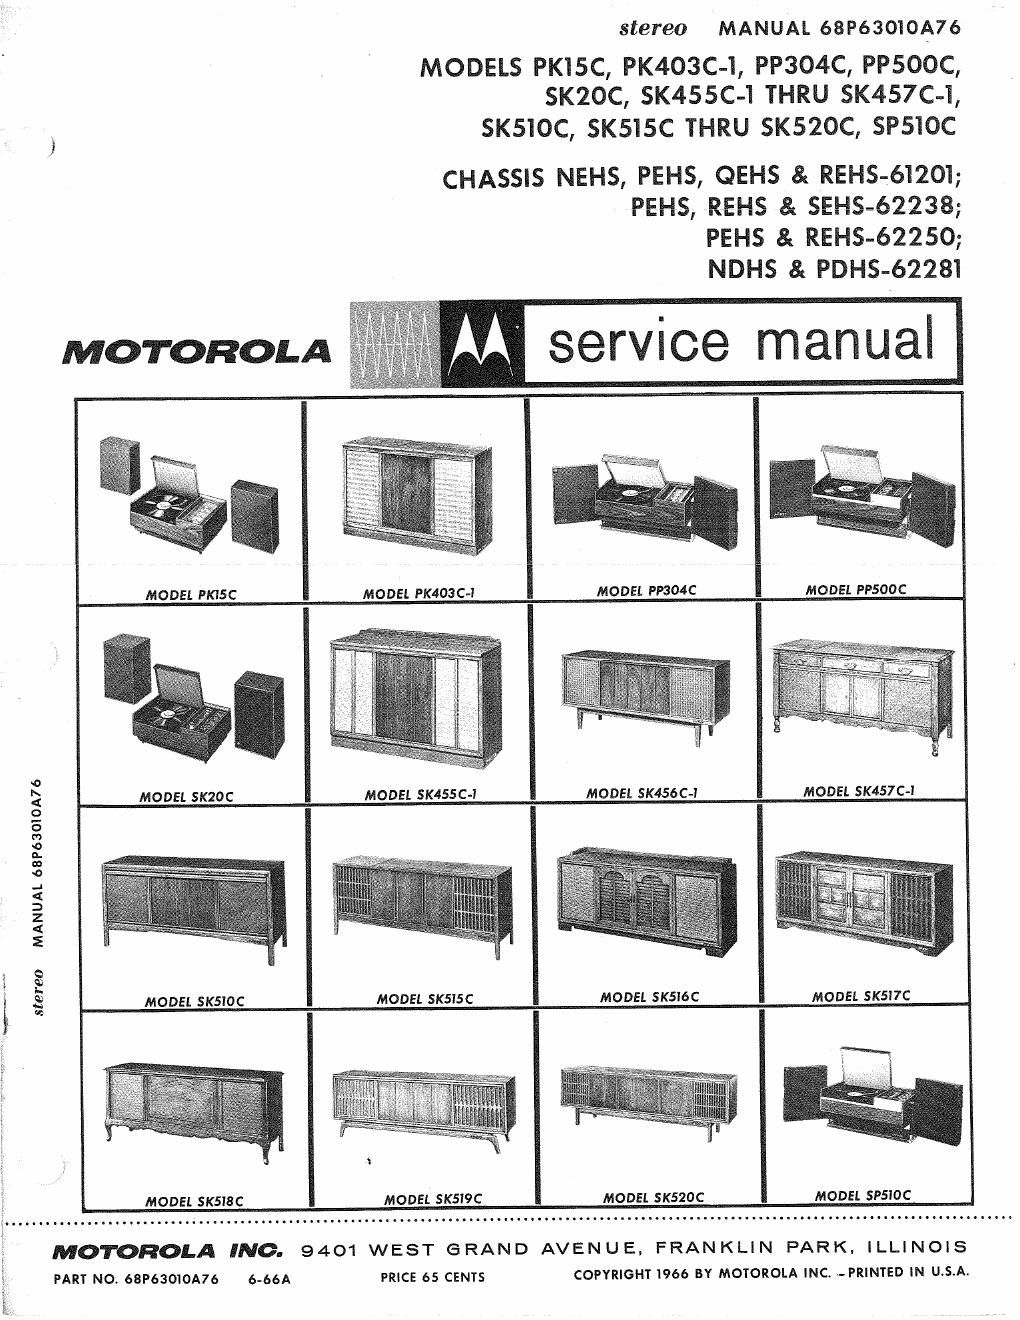 motorola sk 516 c service manual